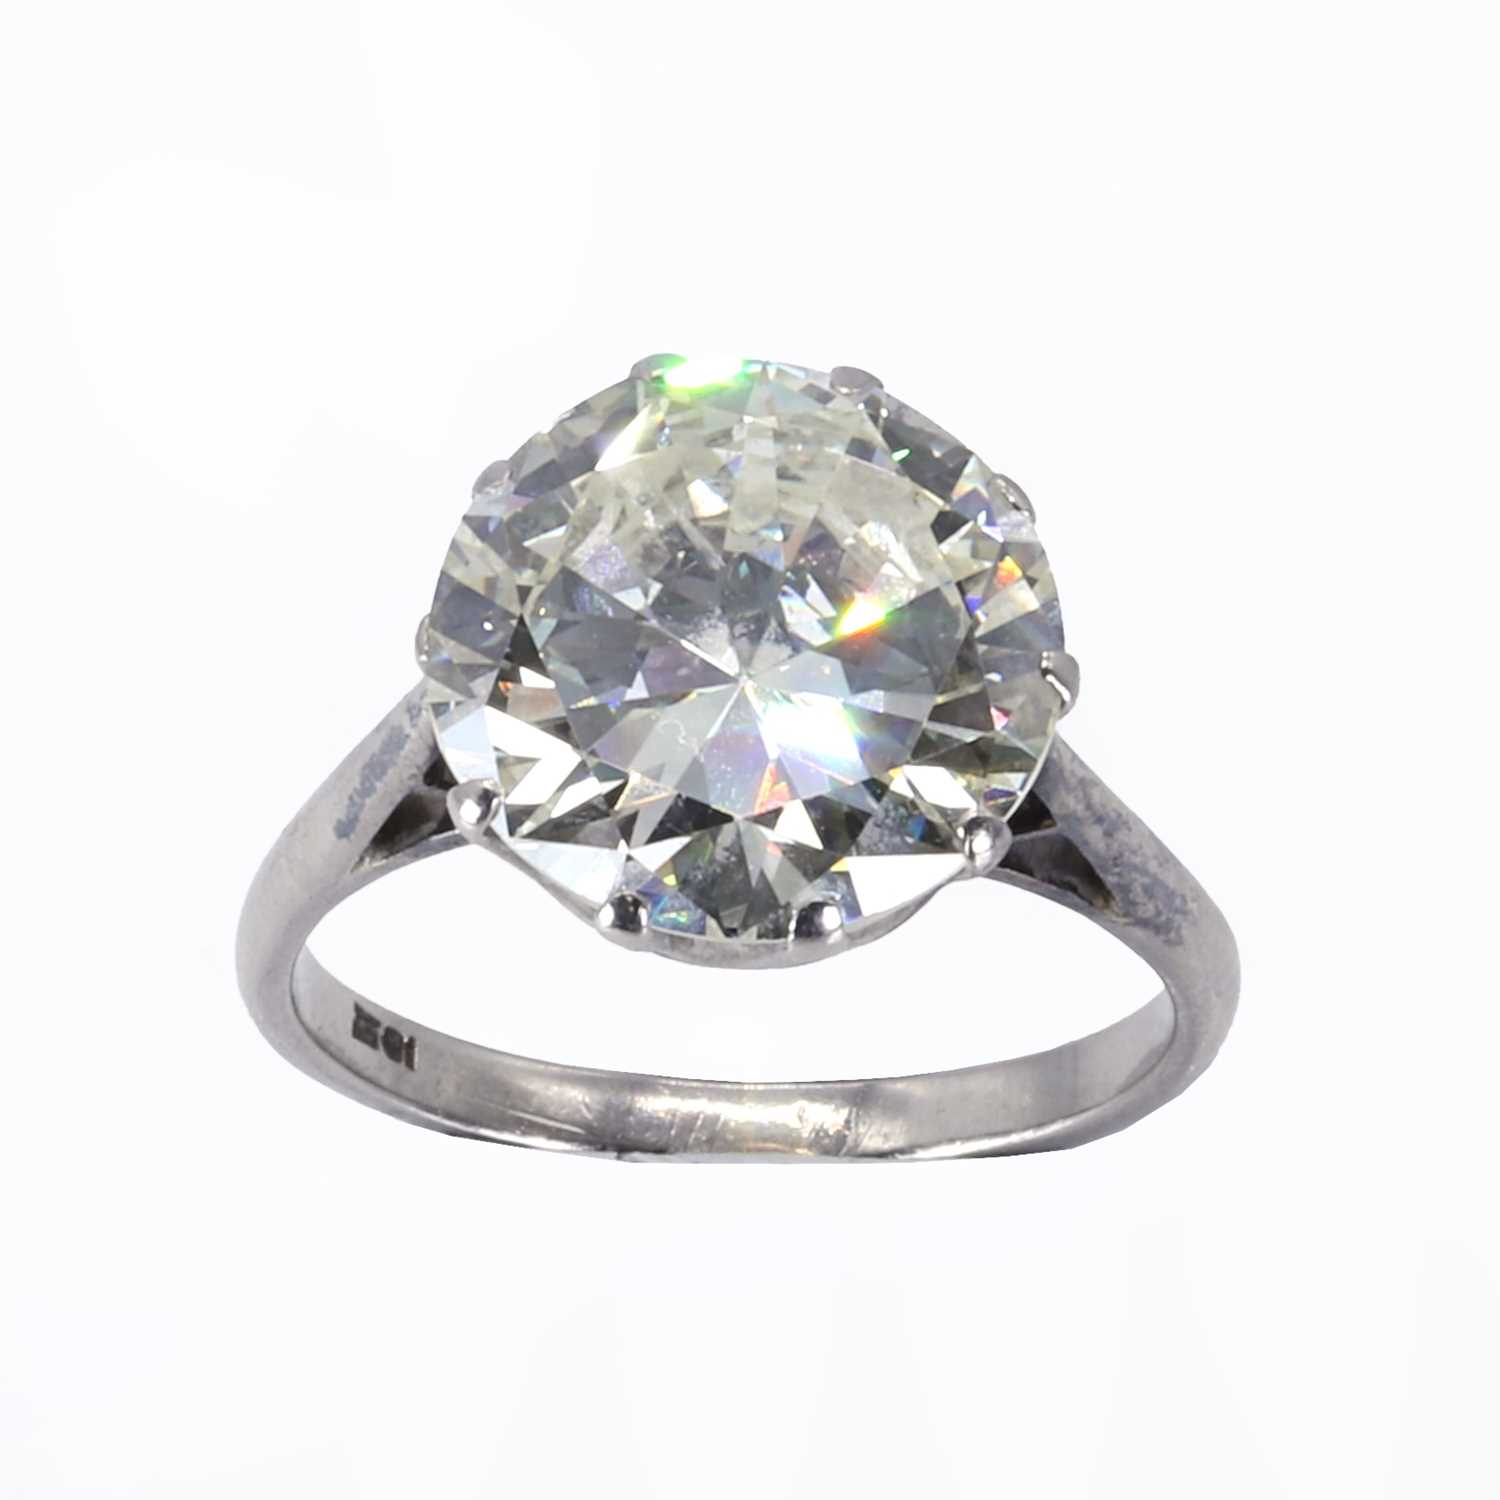 An impressive single stone diamond ring,